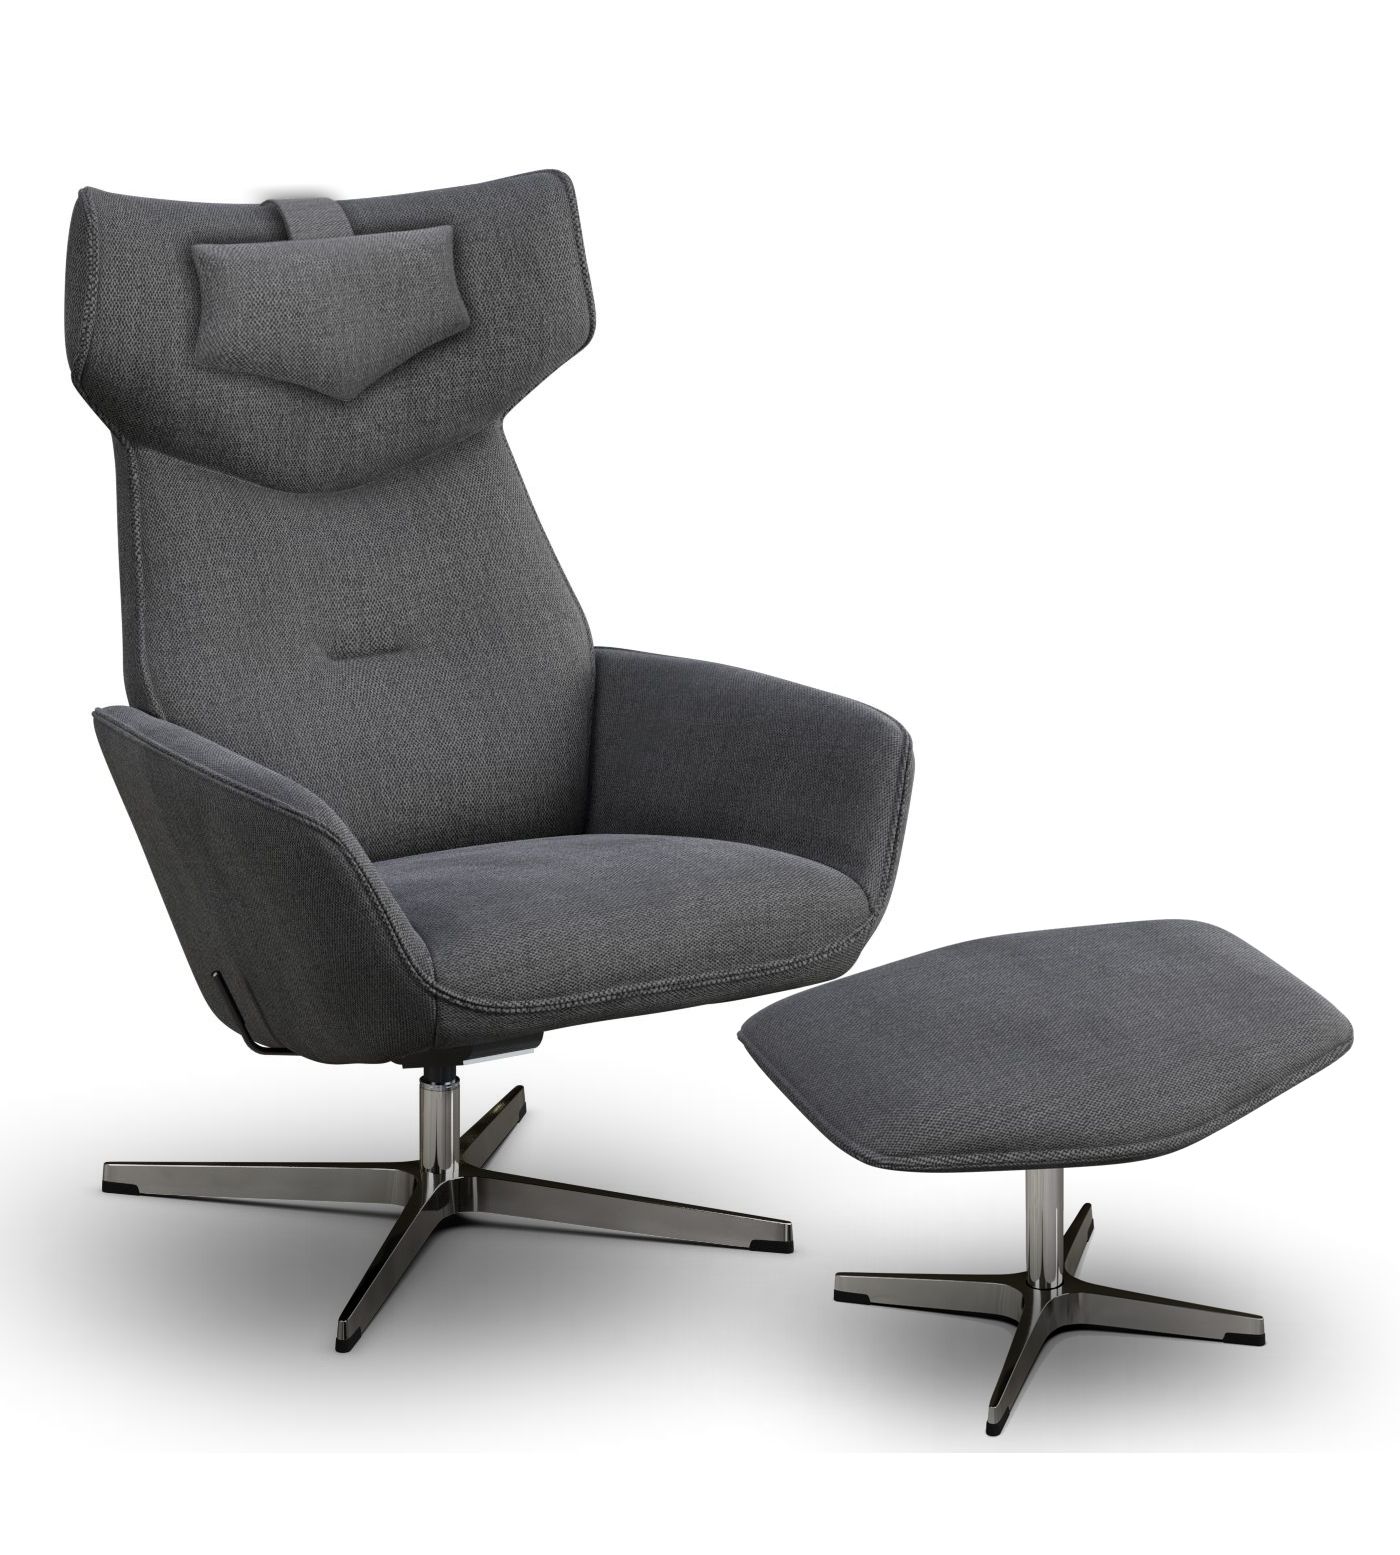 https://www.cressina.com/media/catalog/product/cache/7ce9a2d43f121e06cace3cb83faf66eb/k/e/kebe-palma-recliner-chair-yeti-dark-grey-fabric-cressina-01_1.jpg